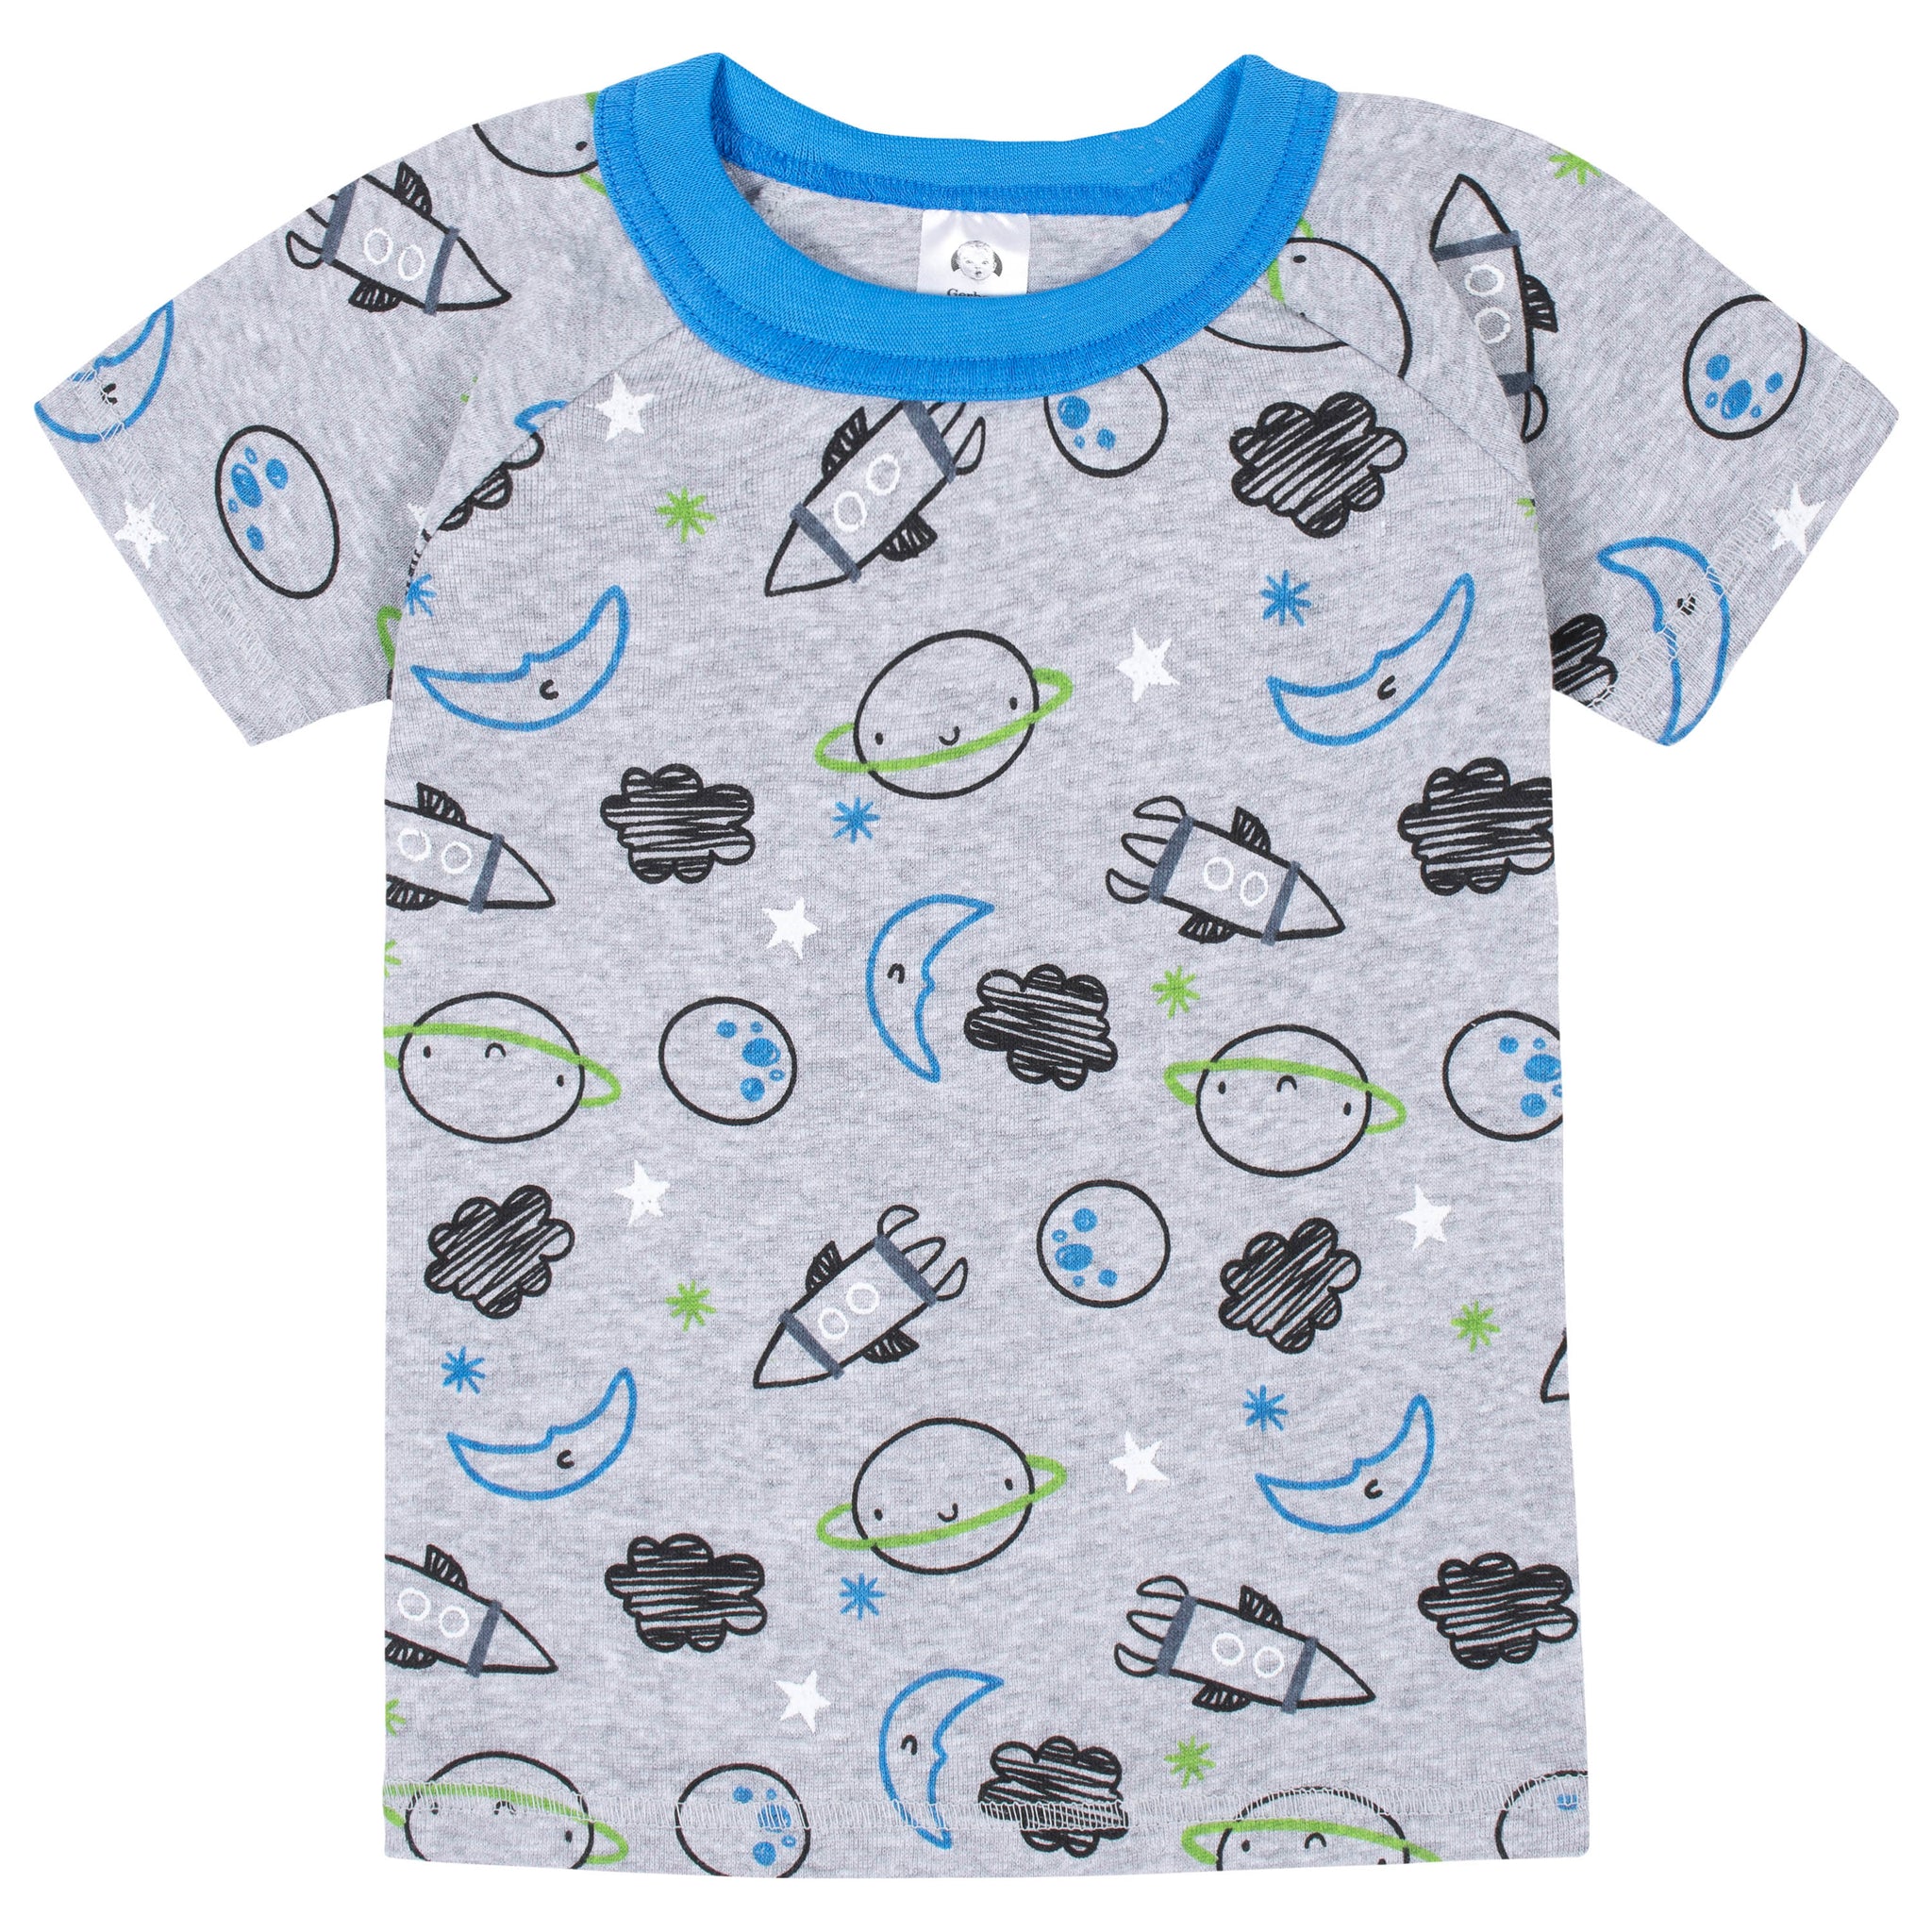 4-Piece Boys Space Snug Fit Cotton Pajamas-Gerber Childrenswear Wholesale